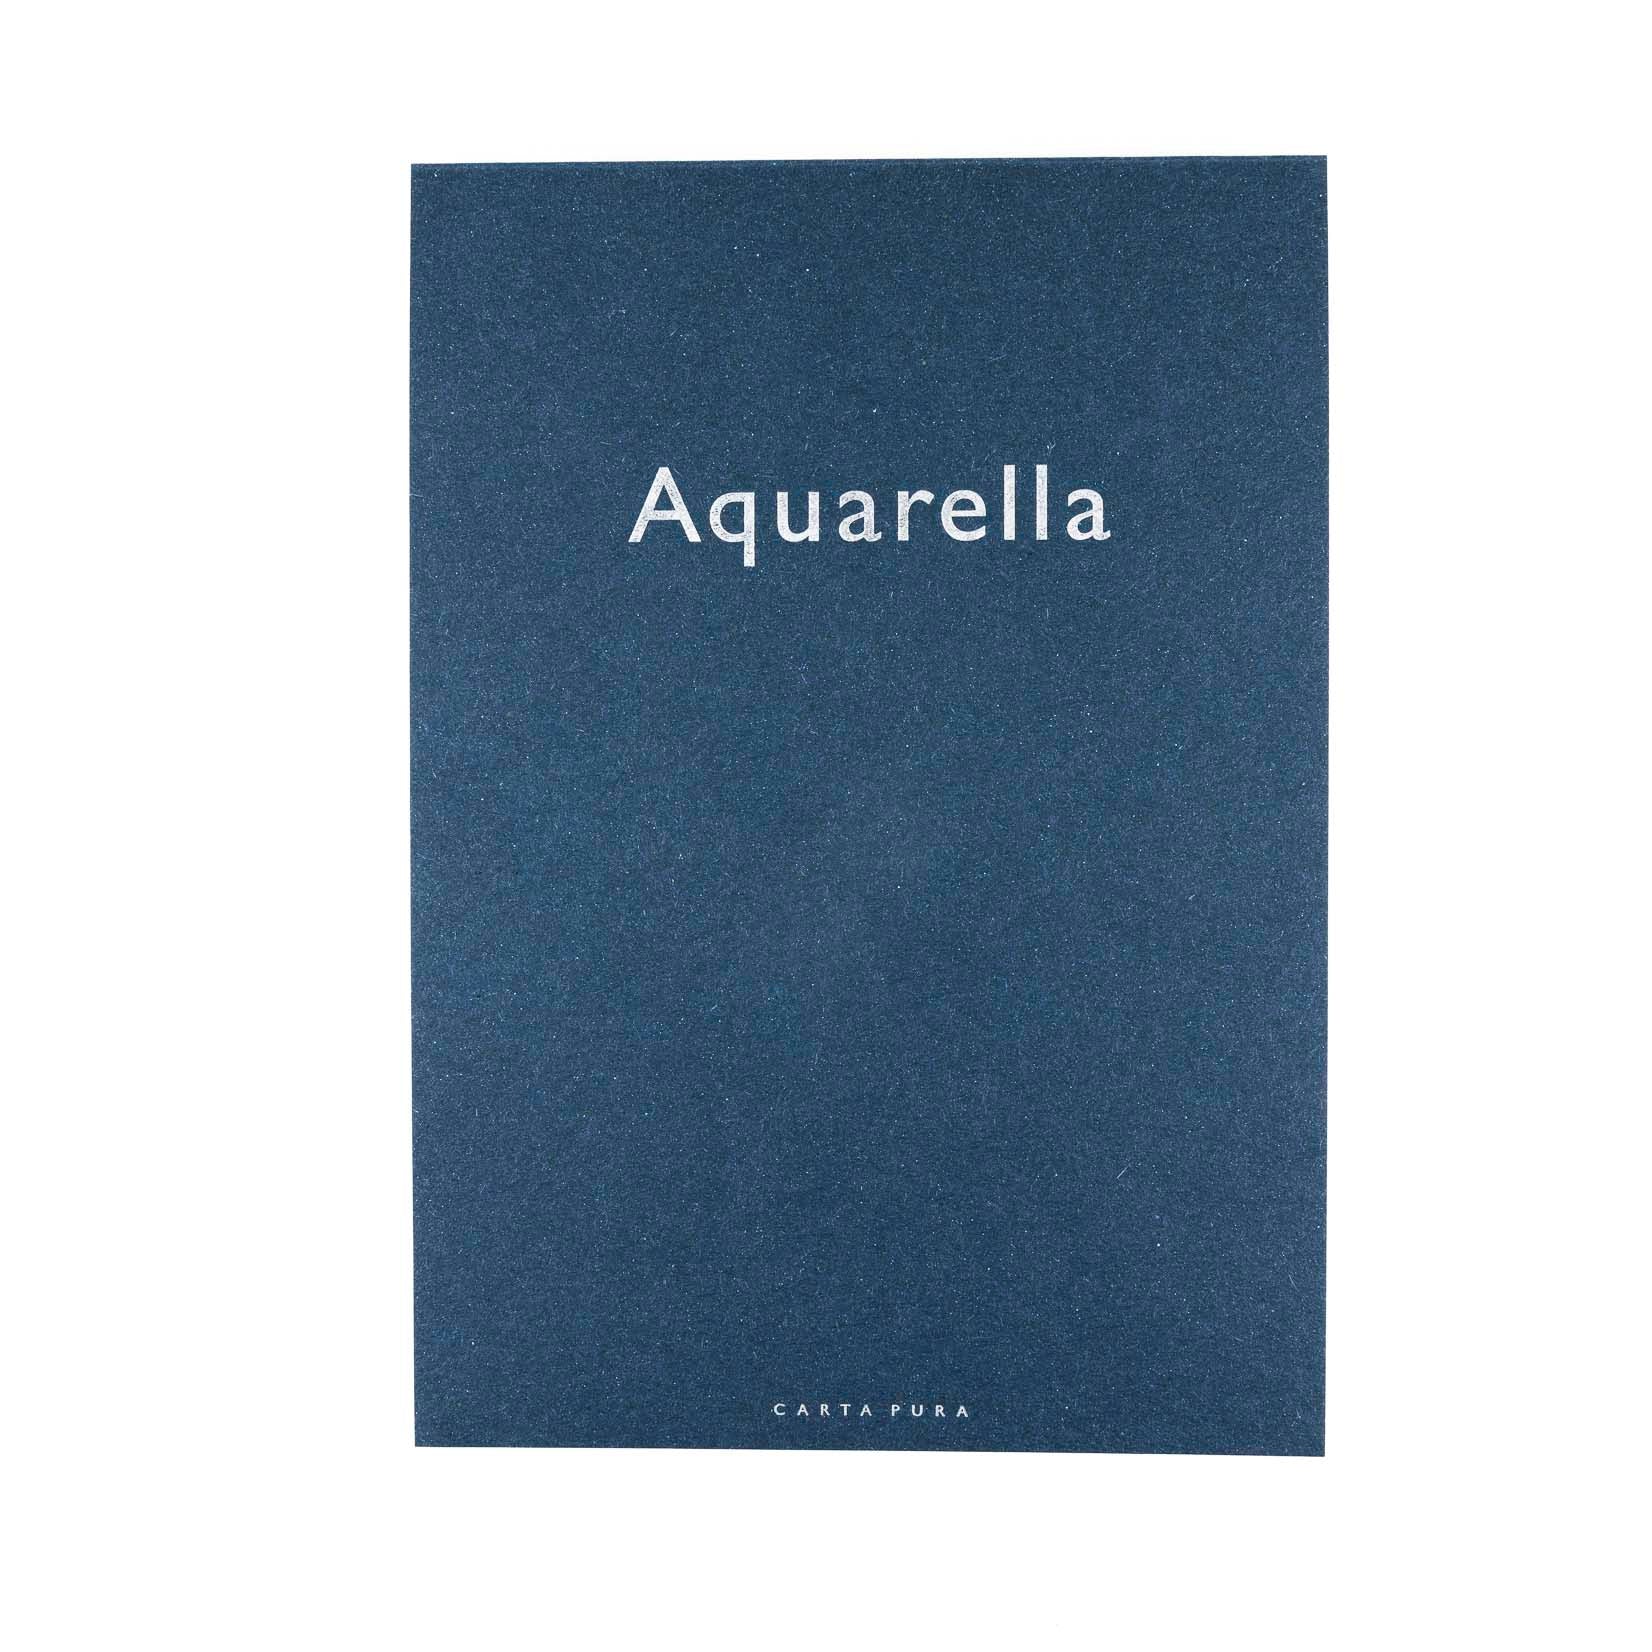 Aquarellblock mit mitternachtsblauem Deckblatt und silberfarbenem Schriftzug AquarelleRivoli Block Aquarell Malblock Aquarella 170 x 240 mm Zeichenblock